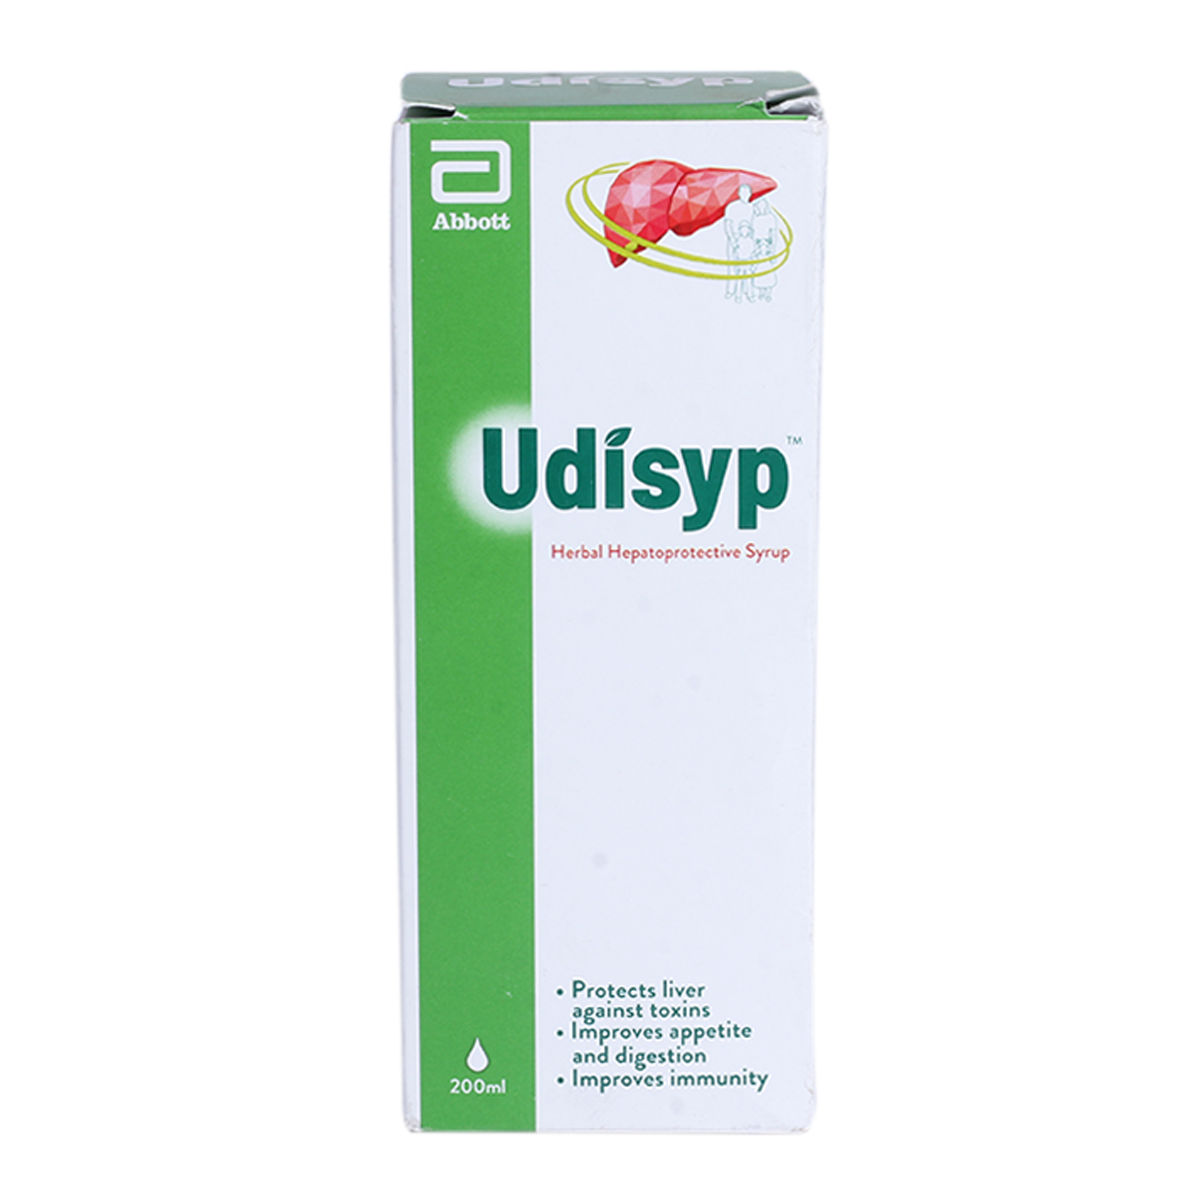 Buy Udisyp Syrup, 200 ml Online